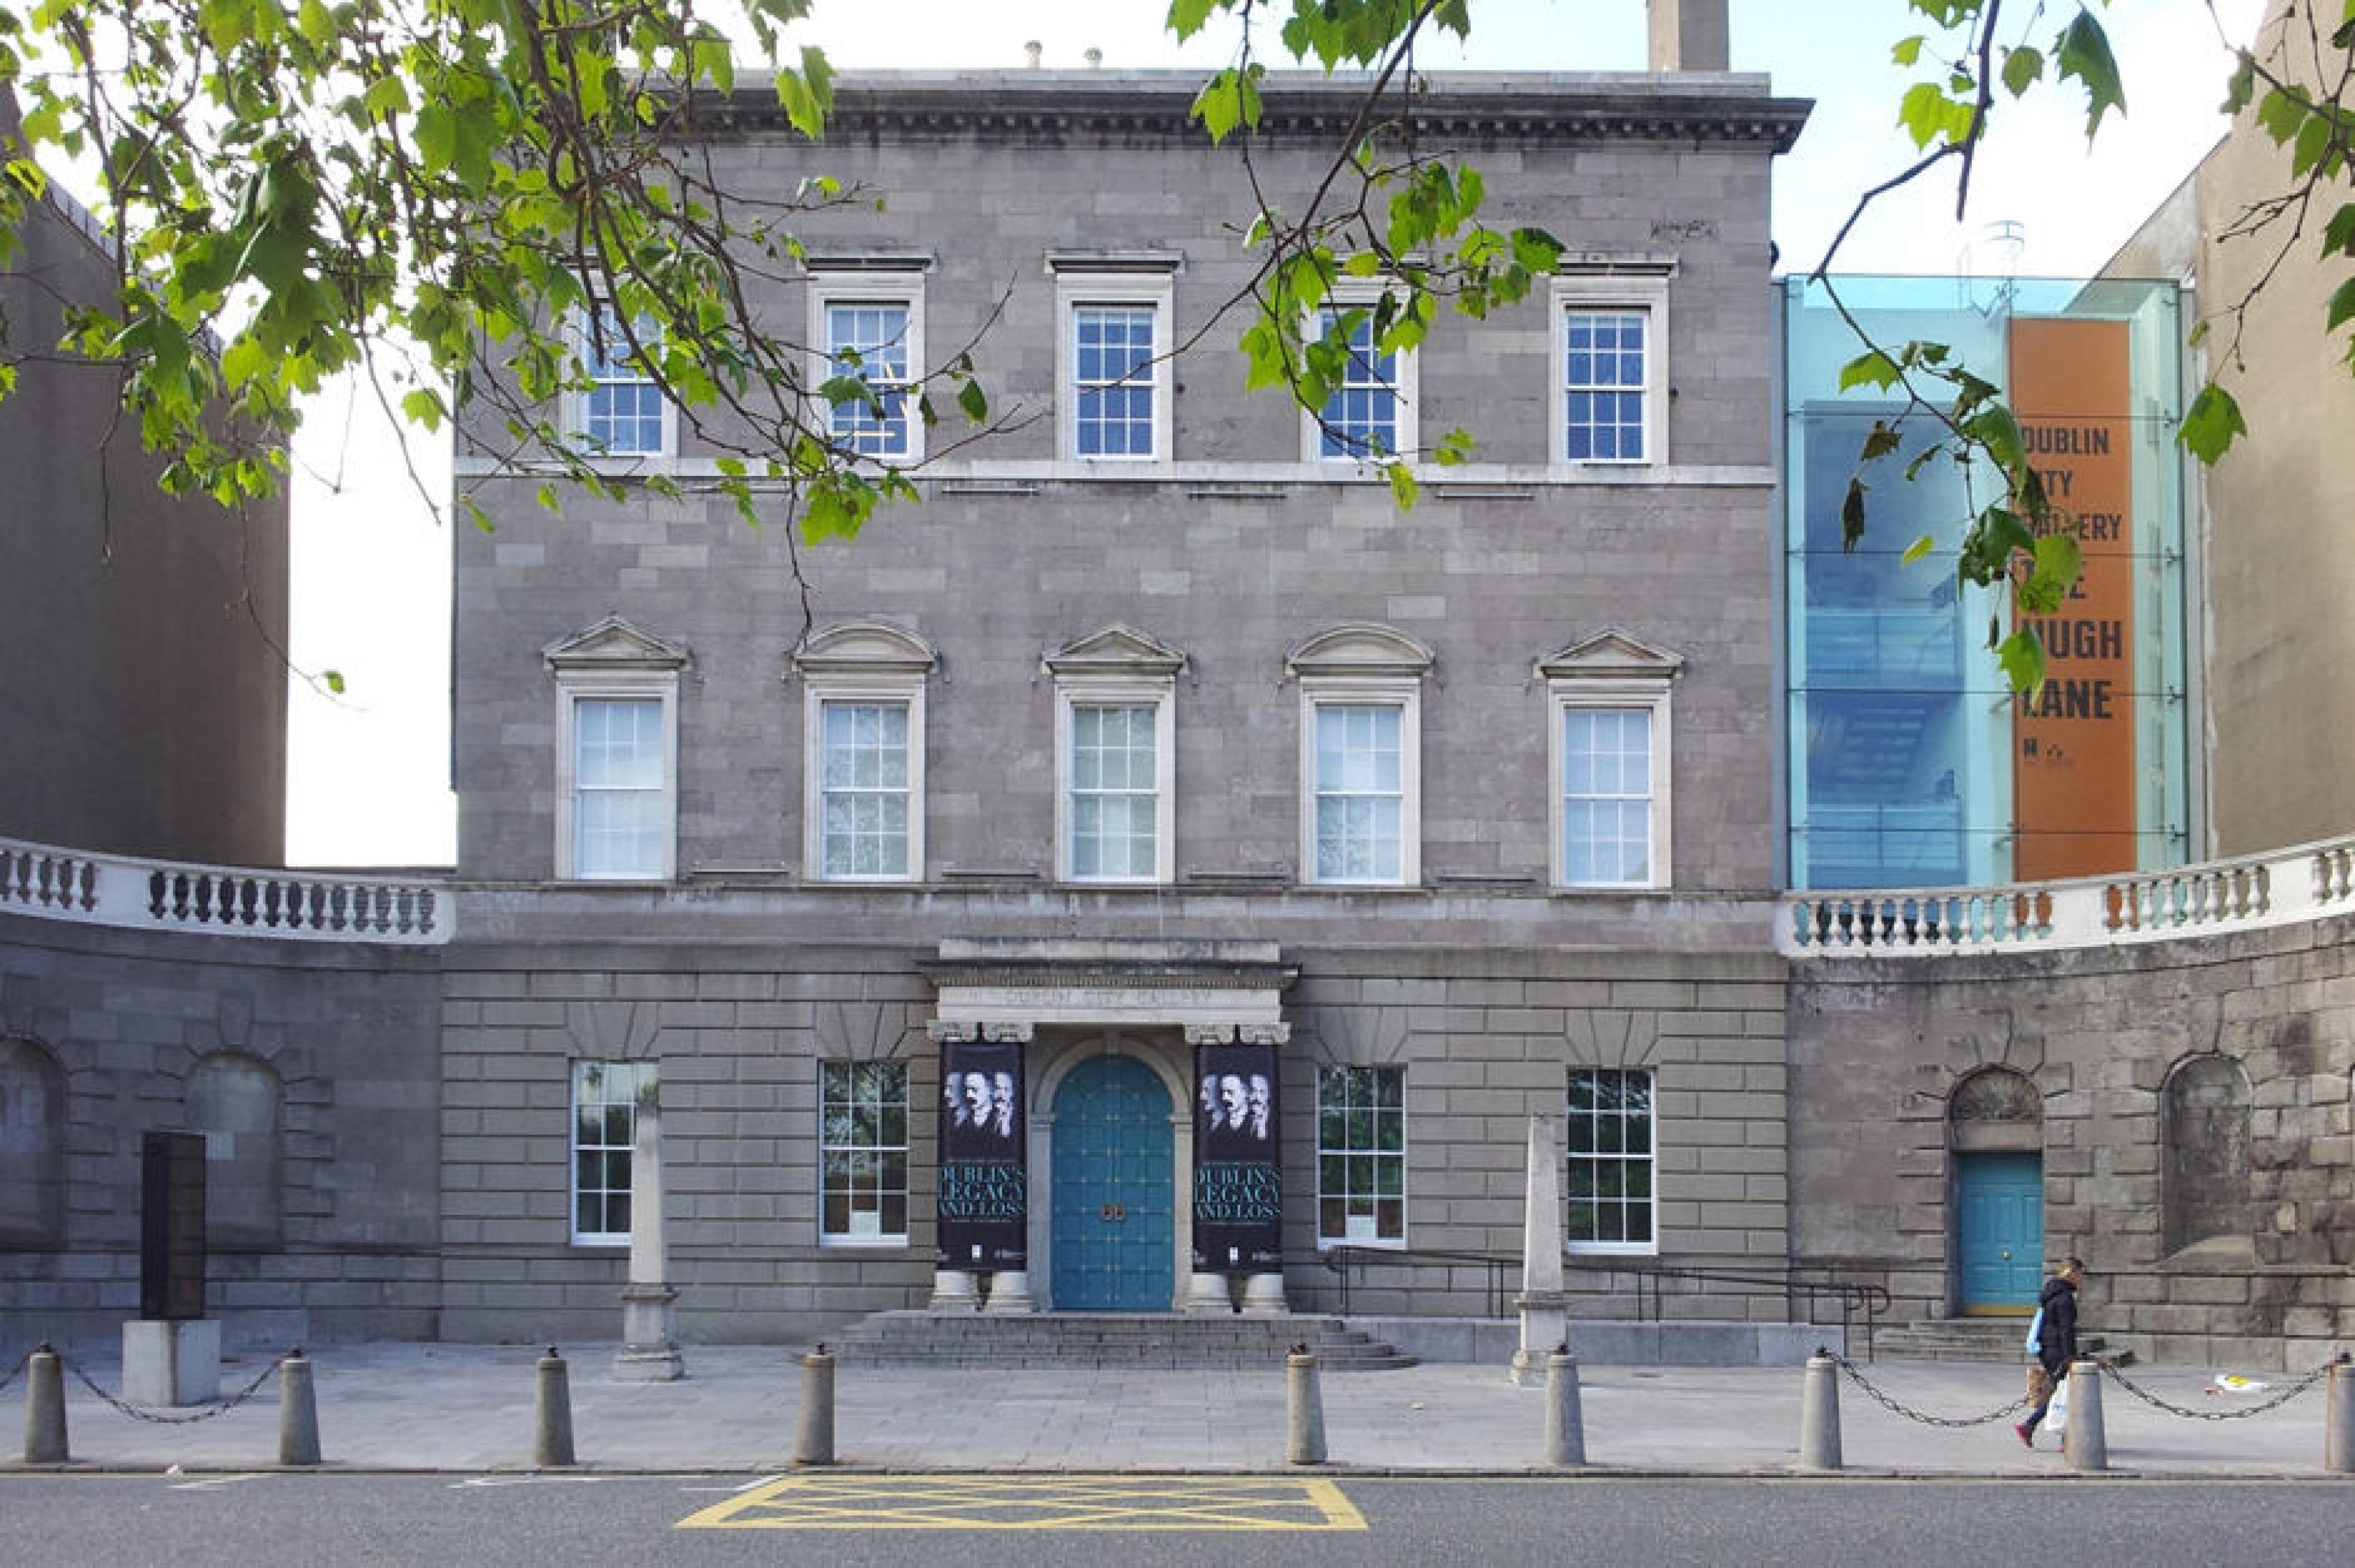 House at Hugh Lane Gallery, Dublin, Ireland